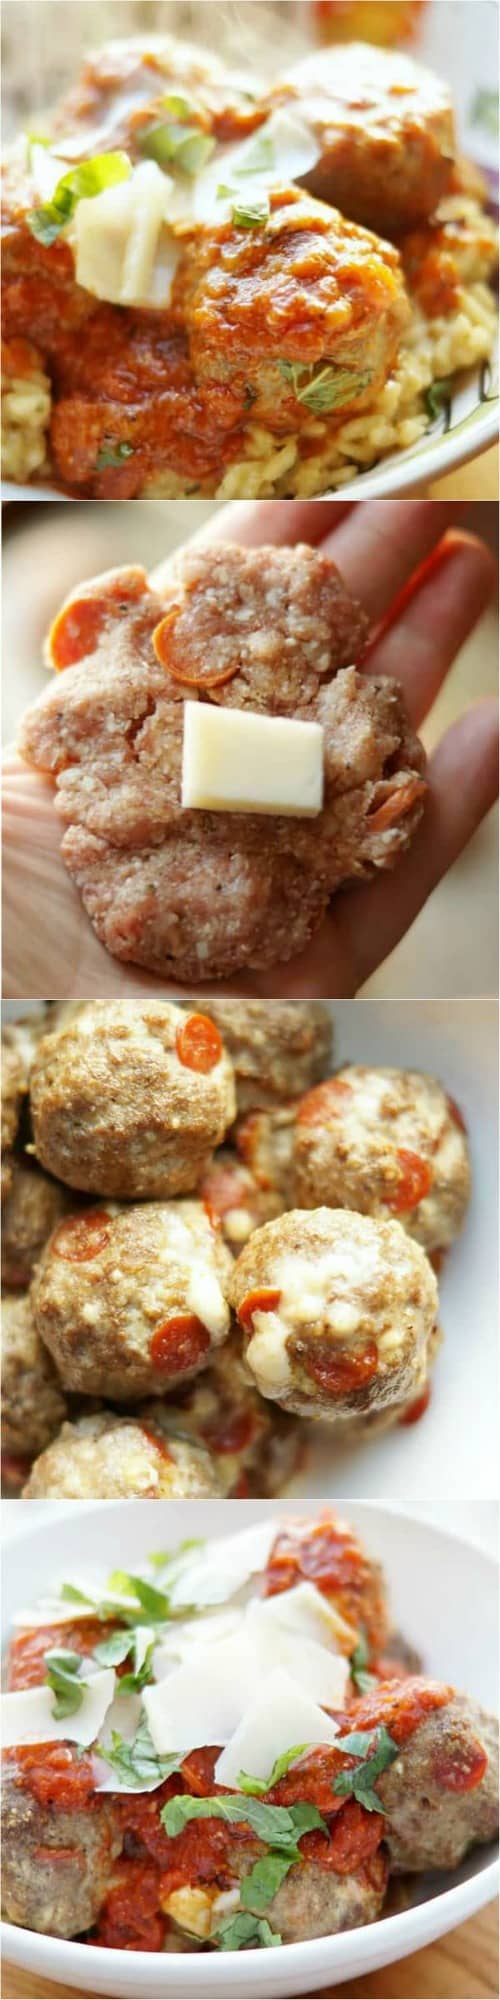 How to make Pizza mozzarella stuffed meatballs